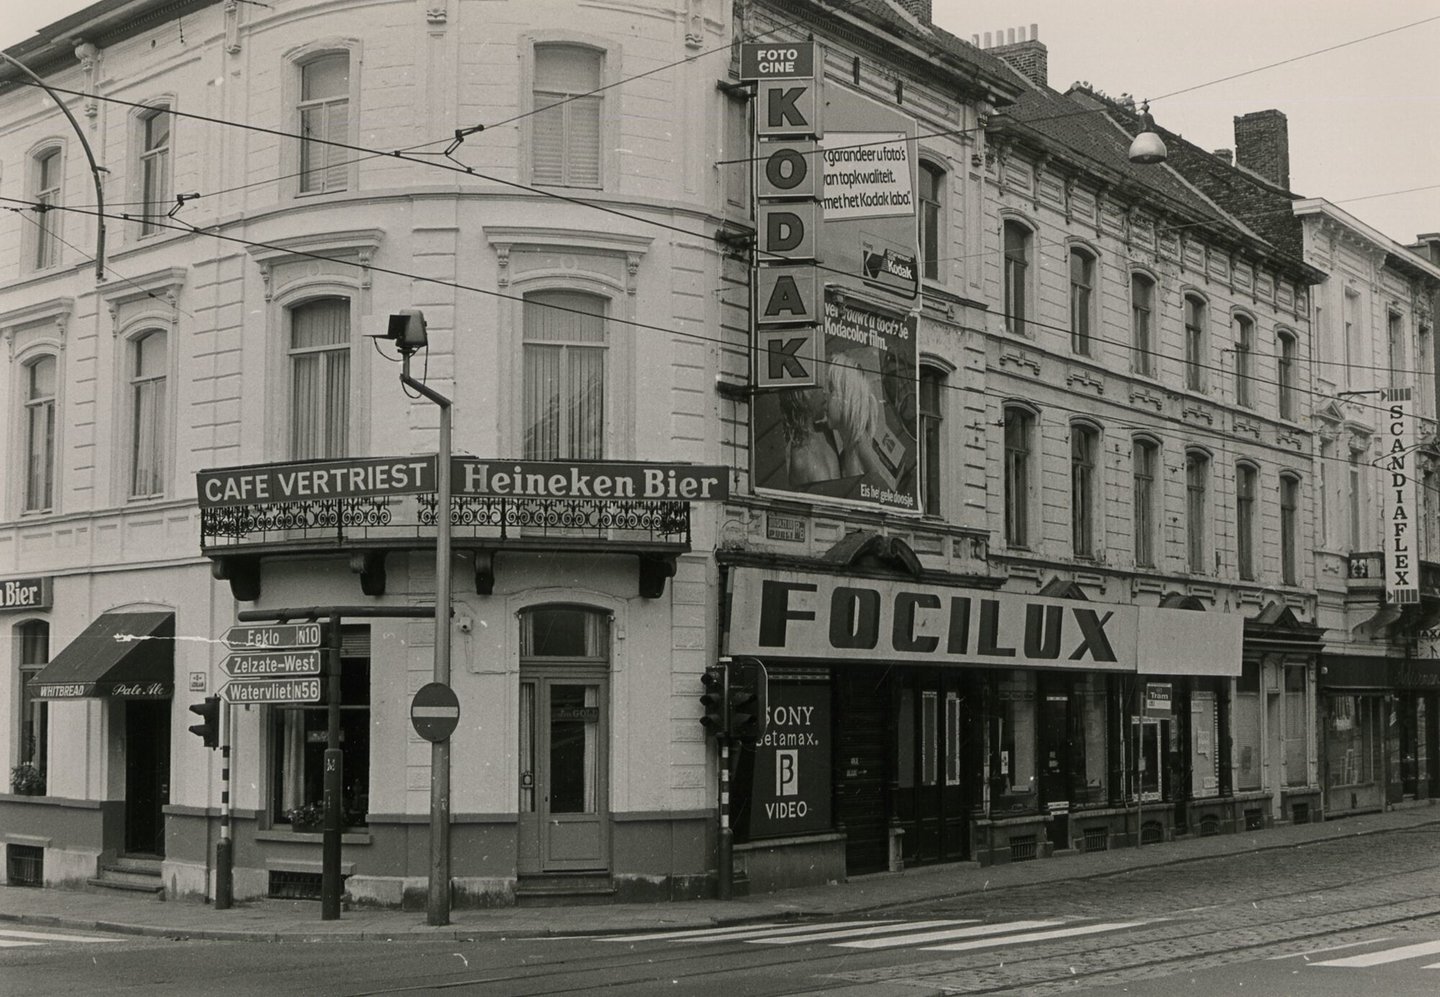 Etalage van fotografiewinkel Focilux en gevel van café Vertriest in Gent